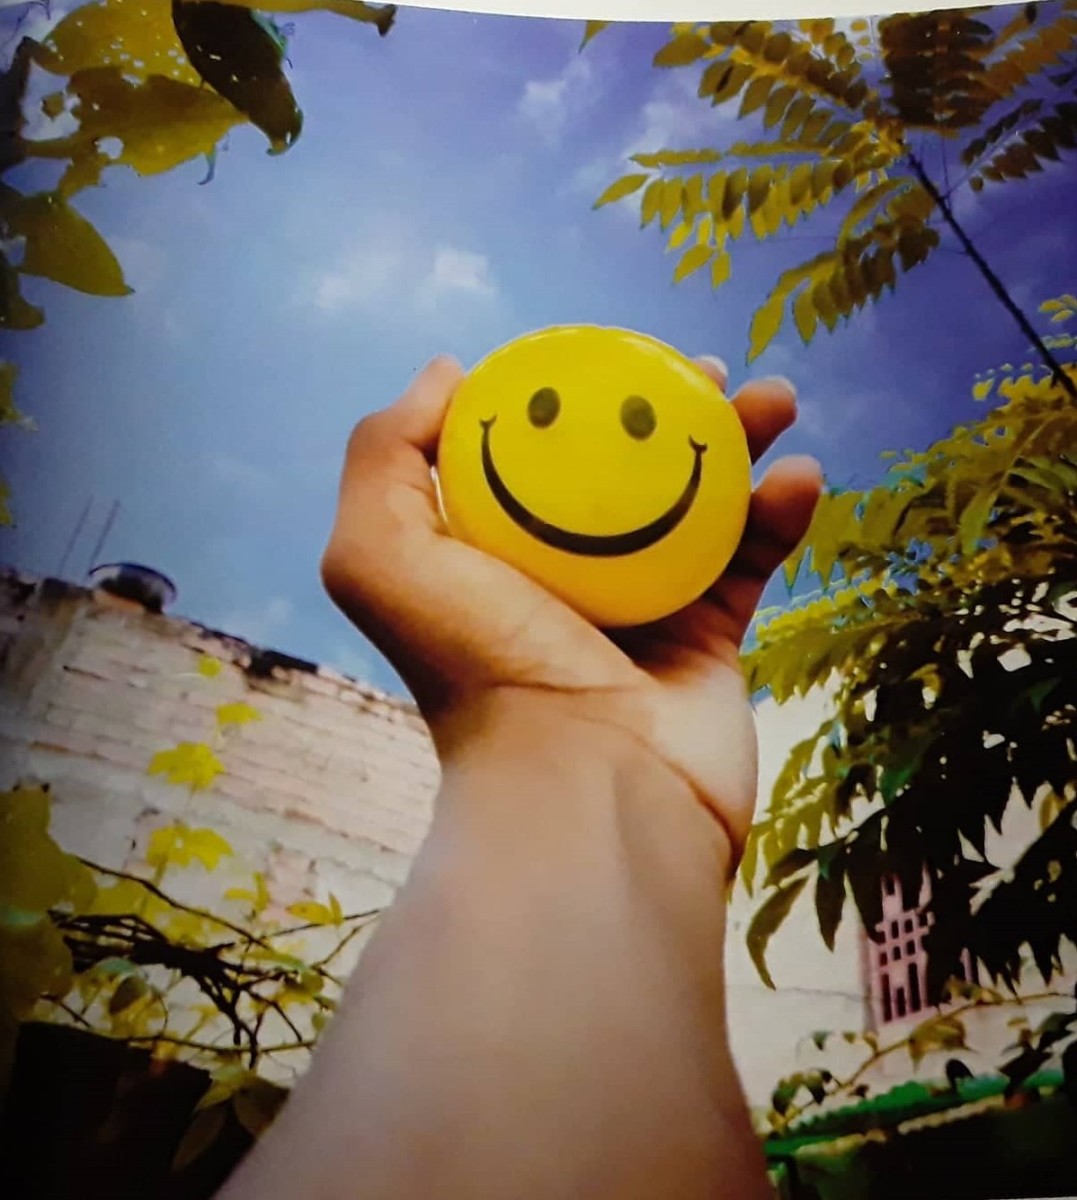 october-7-world-smile-day-a-sign-of-defiant-optimism